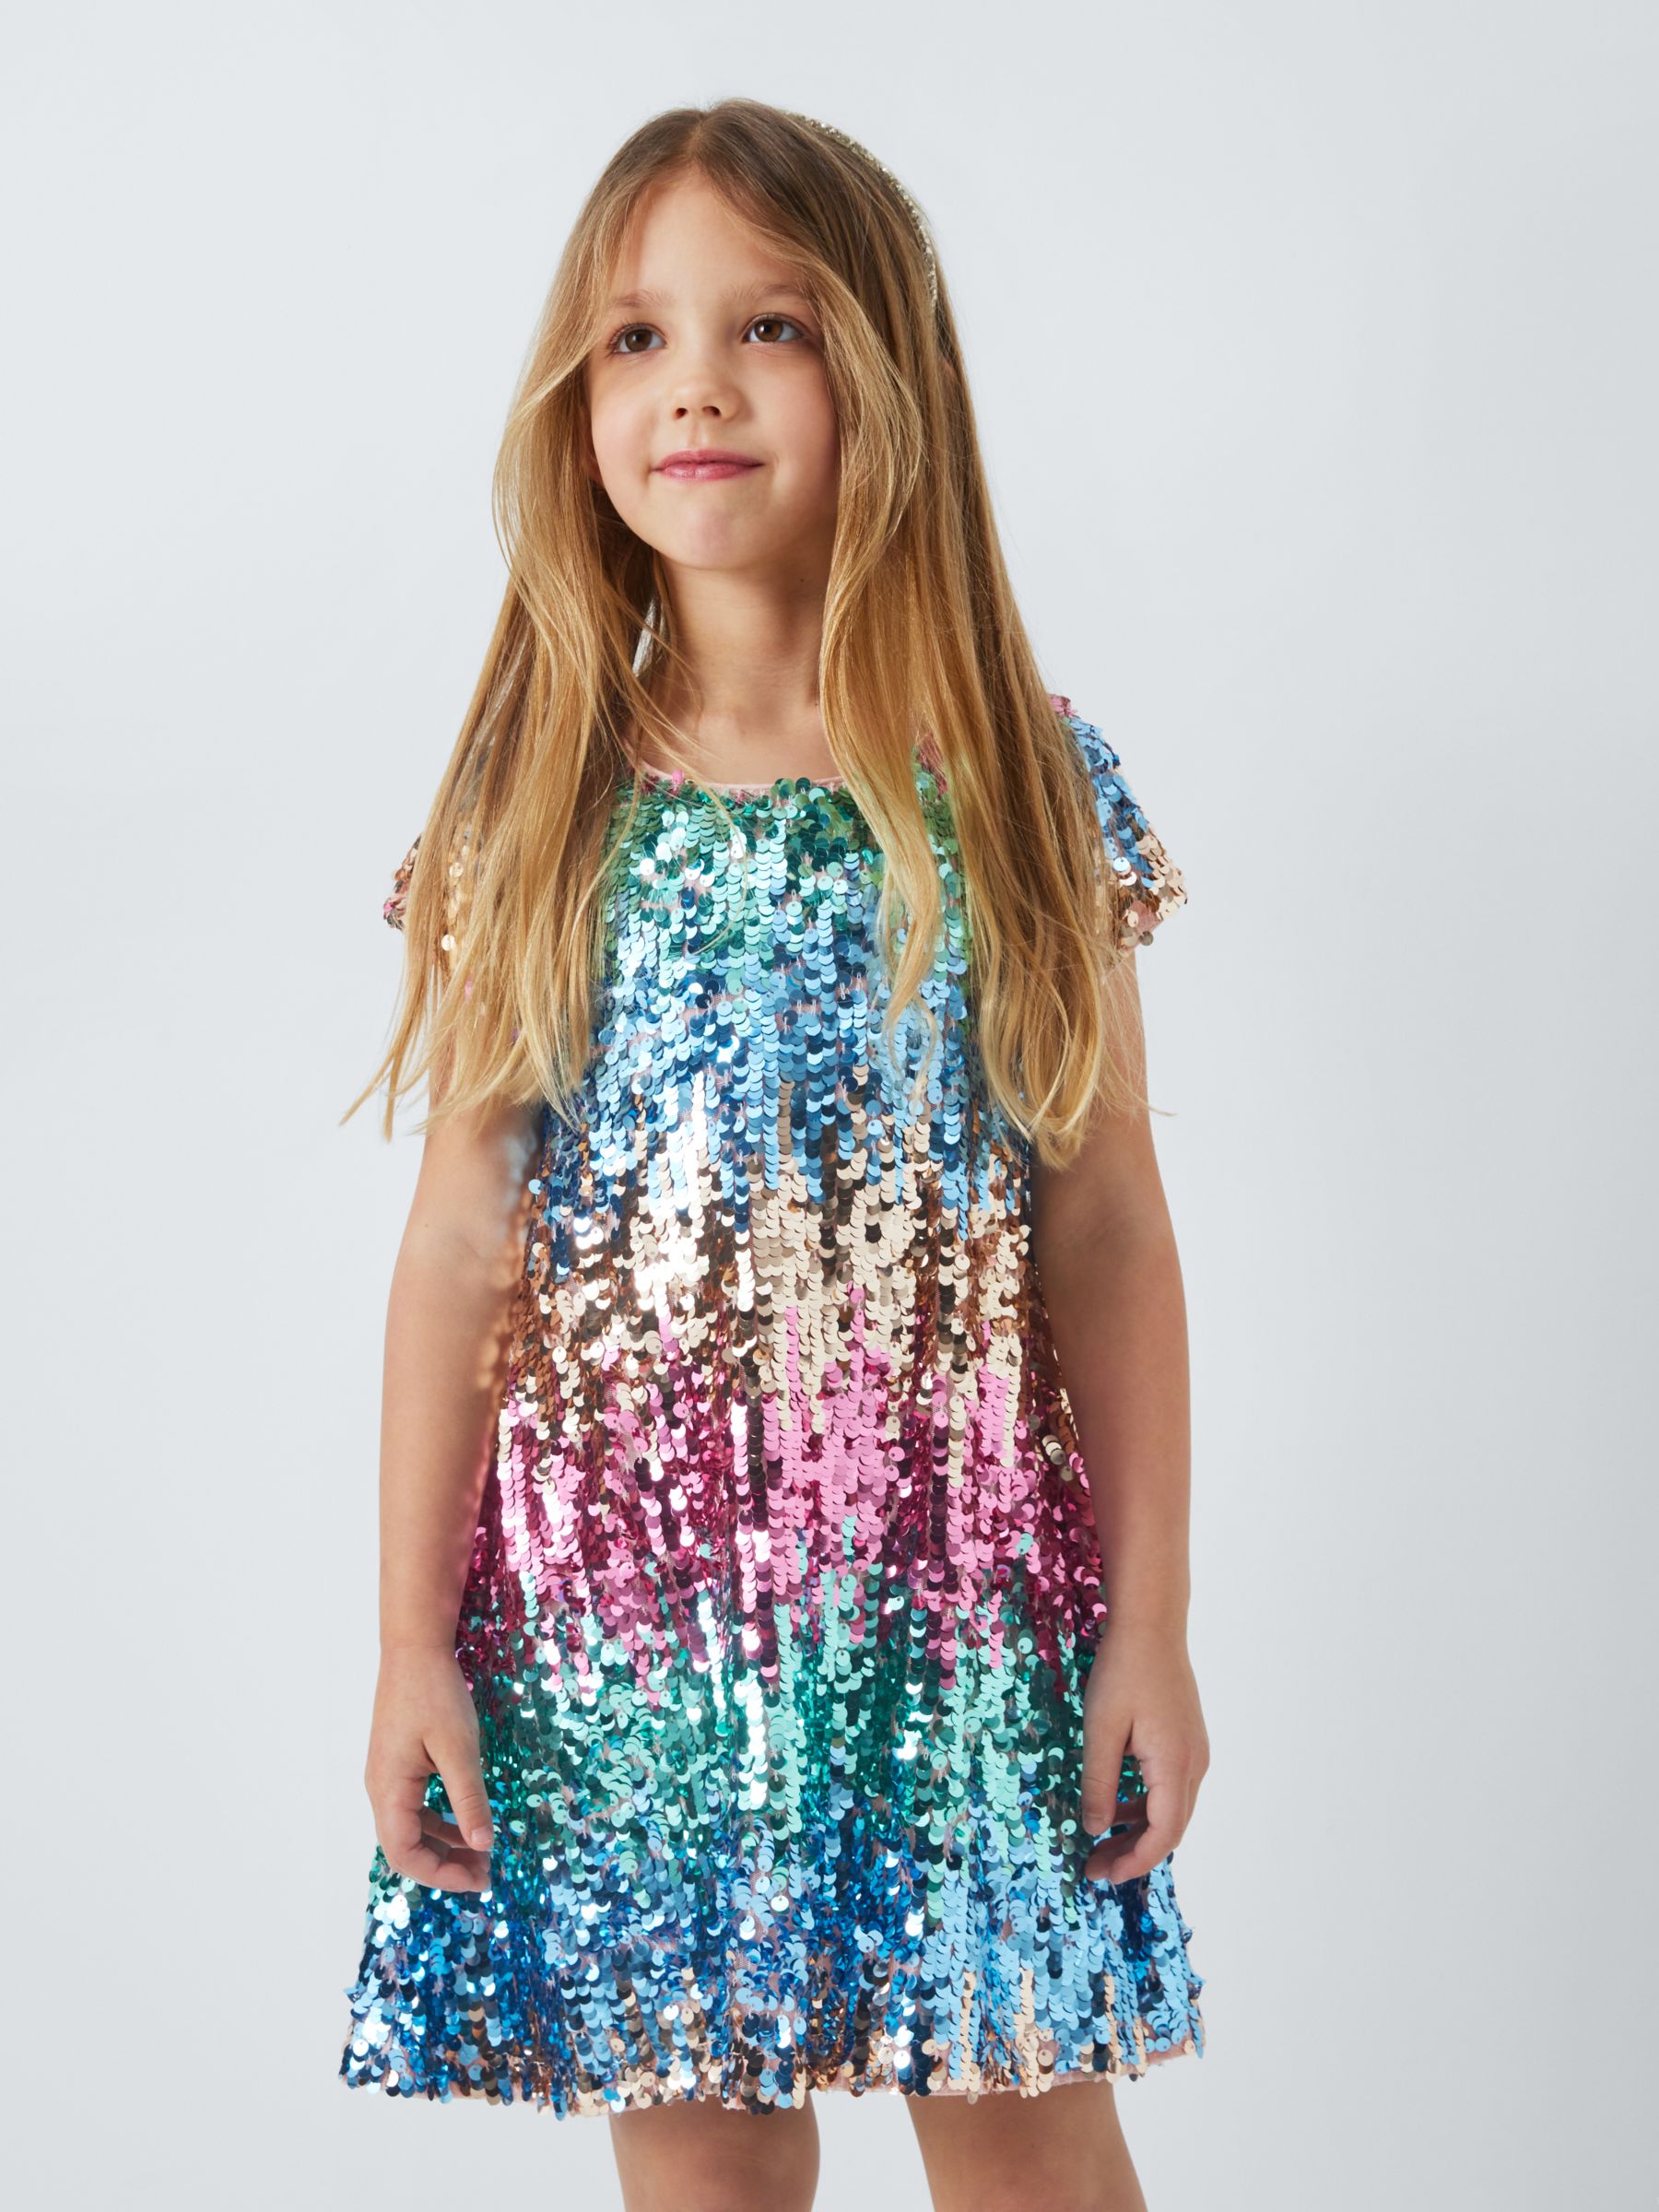 John Lewis Kids' Sequin Ombre Dress, Multi at John Lewis & Partners